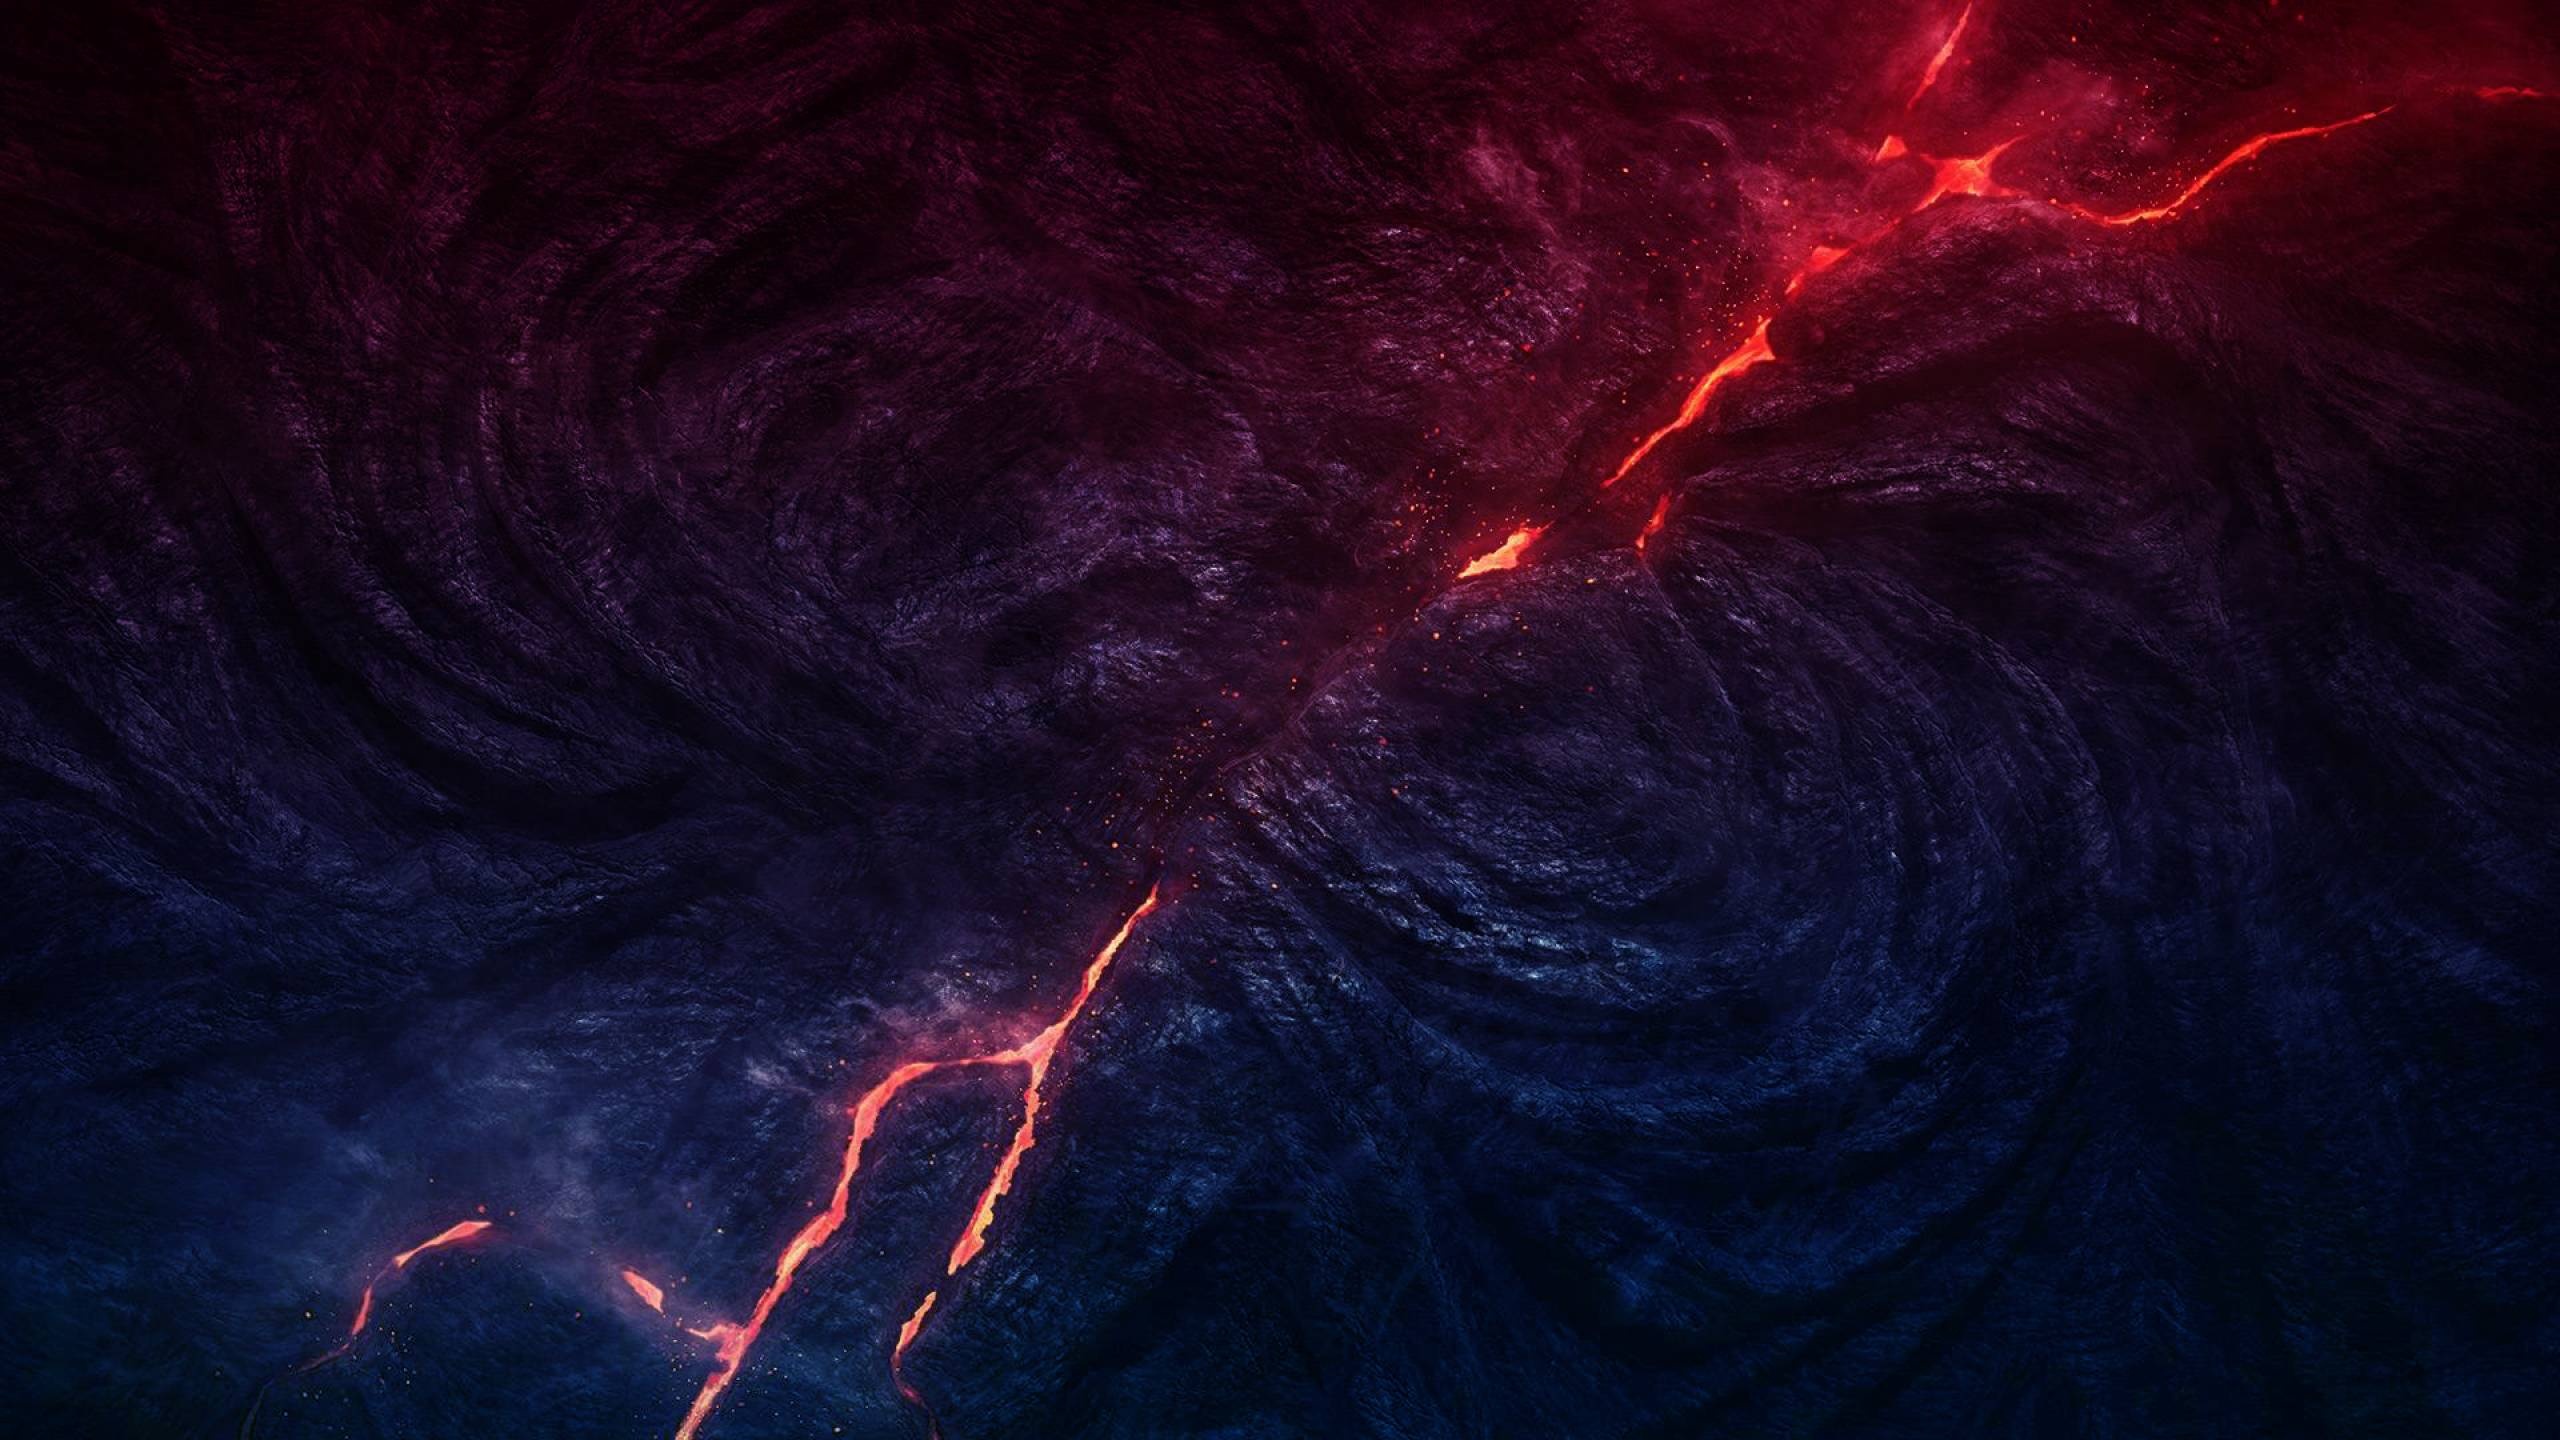 Stunning 4K lava imagery, Volcanic intensity, Mesmerizing eruption, Nature's fiery artistry, 2560x1440 HD Desktop